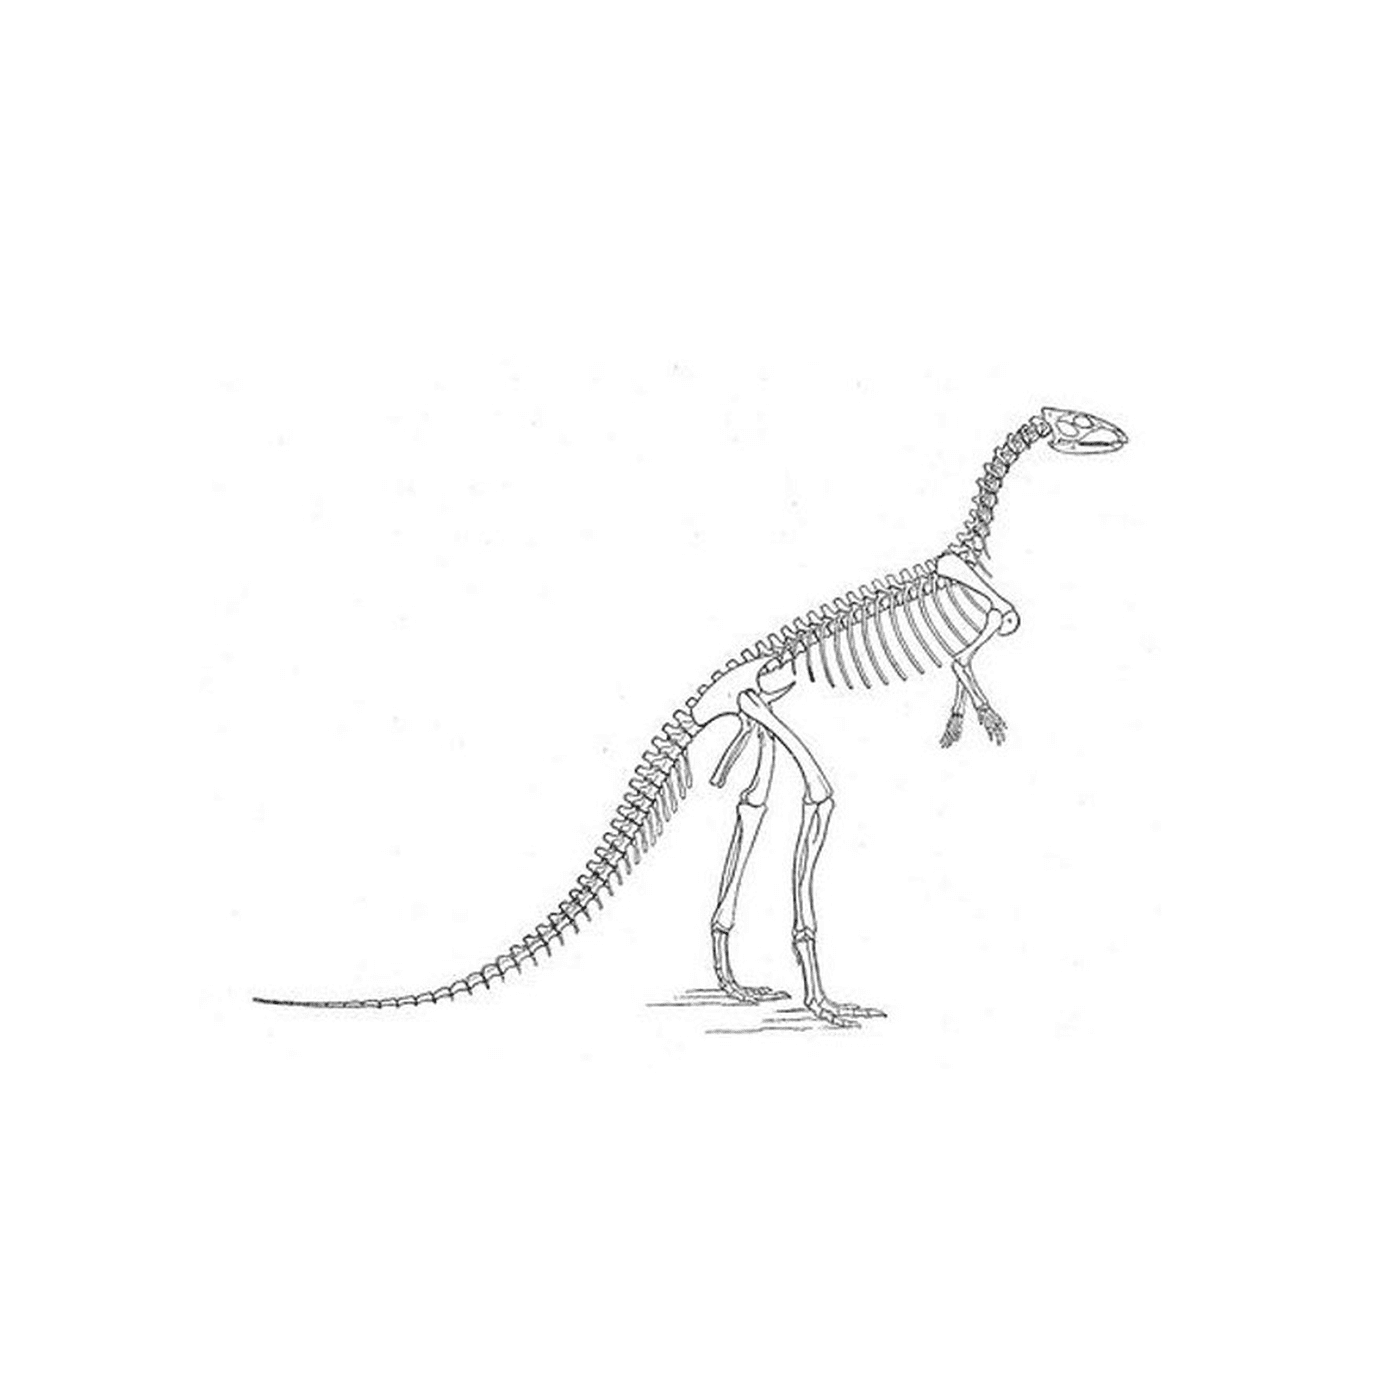  A dinosaur skeleton 